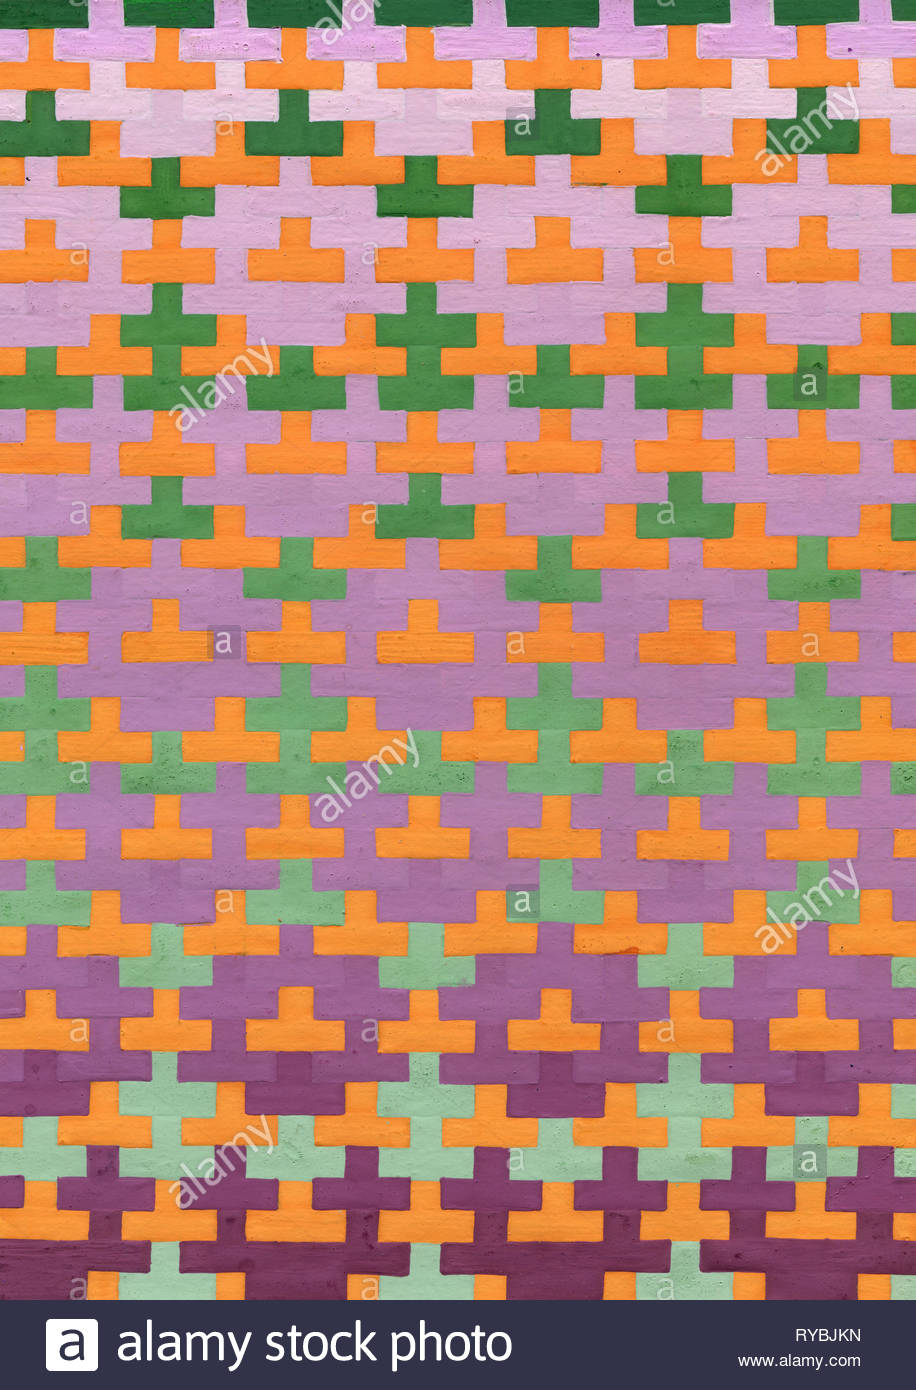 Tetris Elements Brick Pieces Game Background Illustration Stock